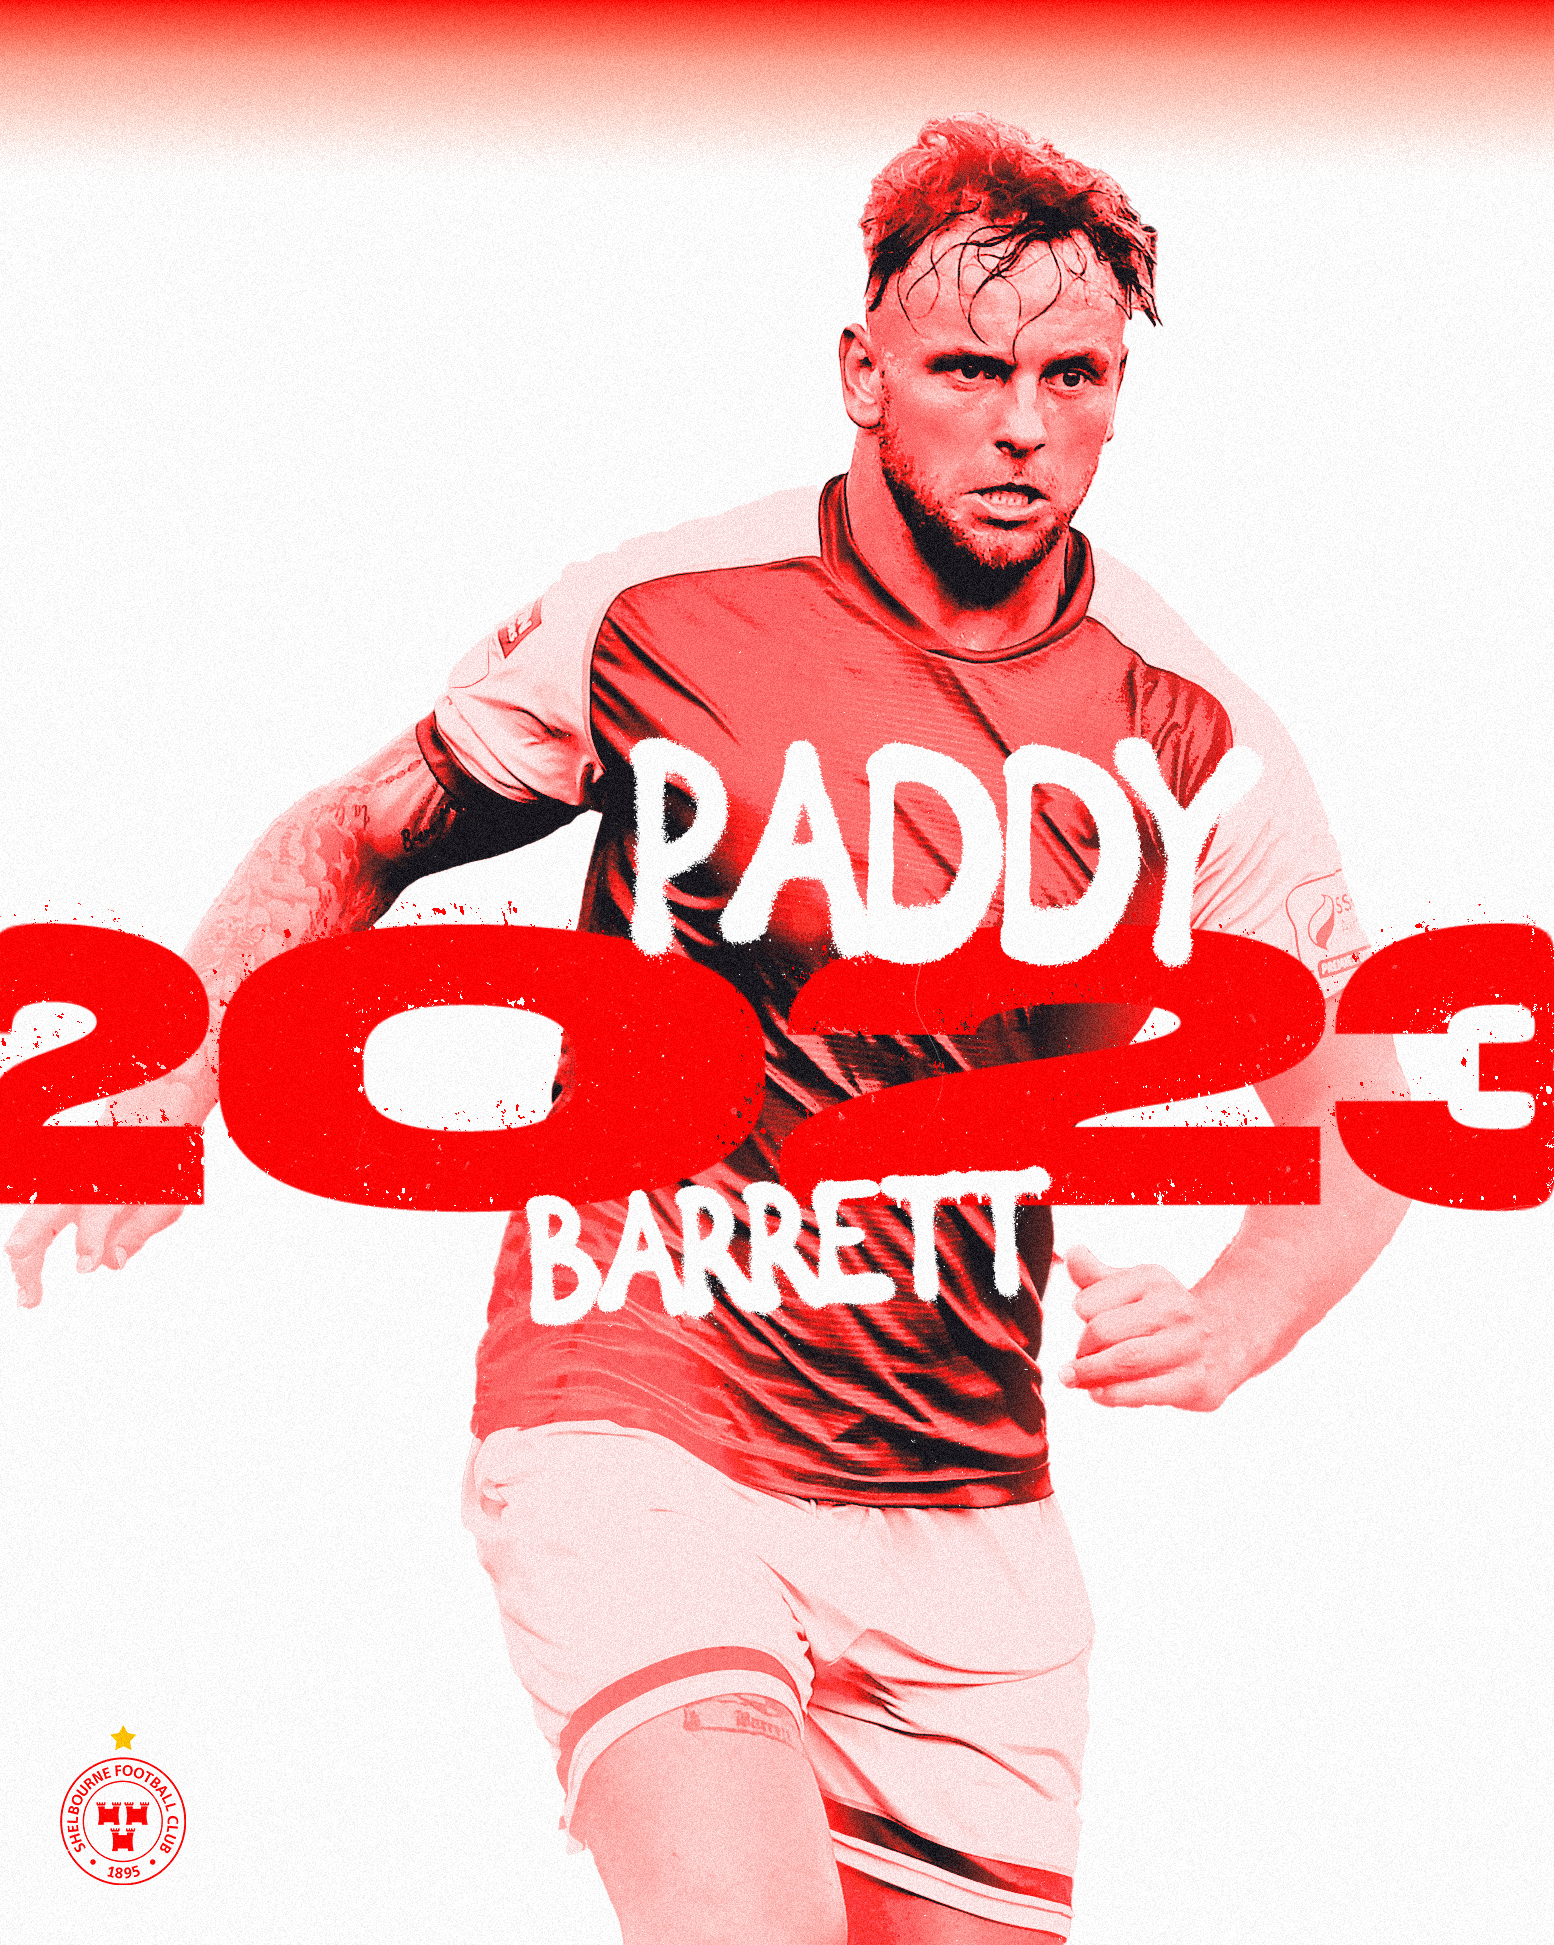 Paddy Barrett is a Red